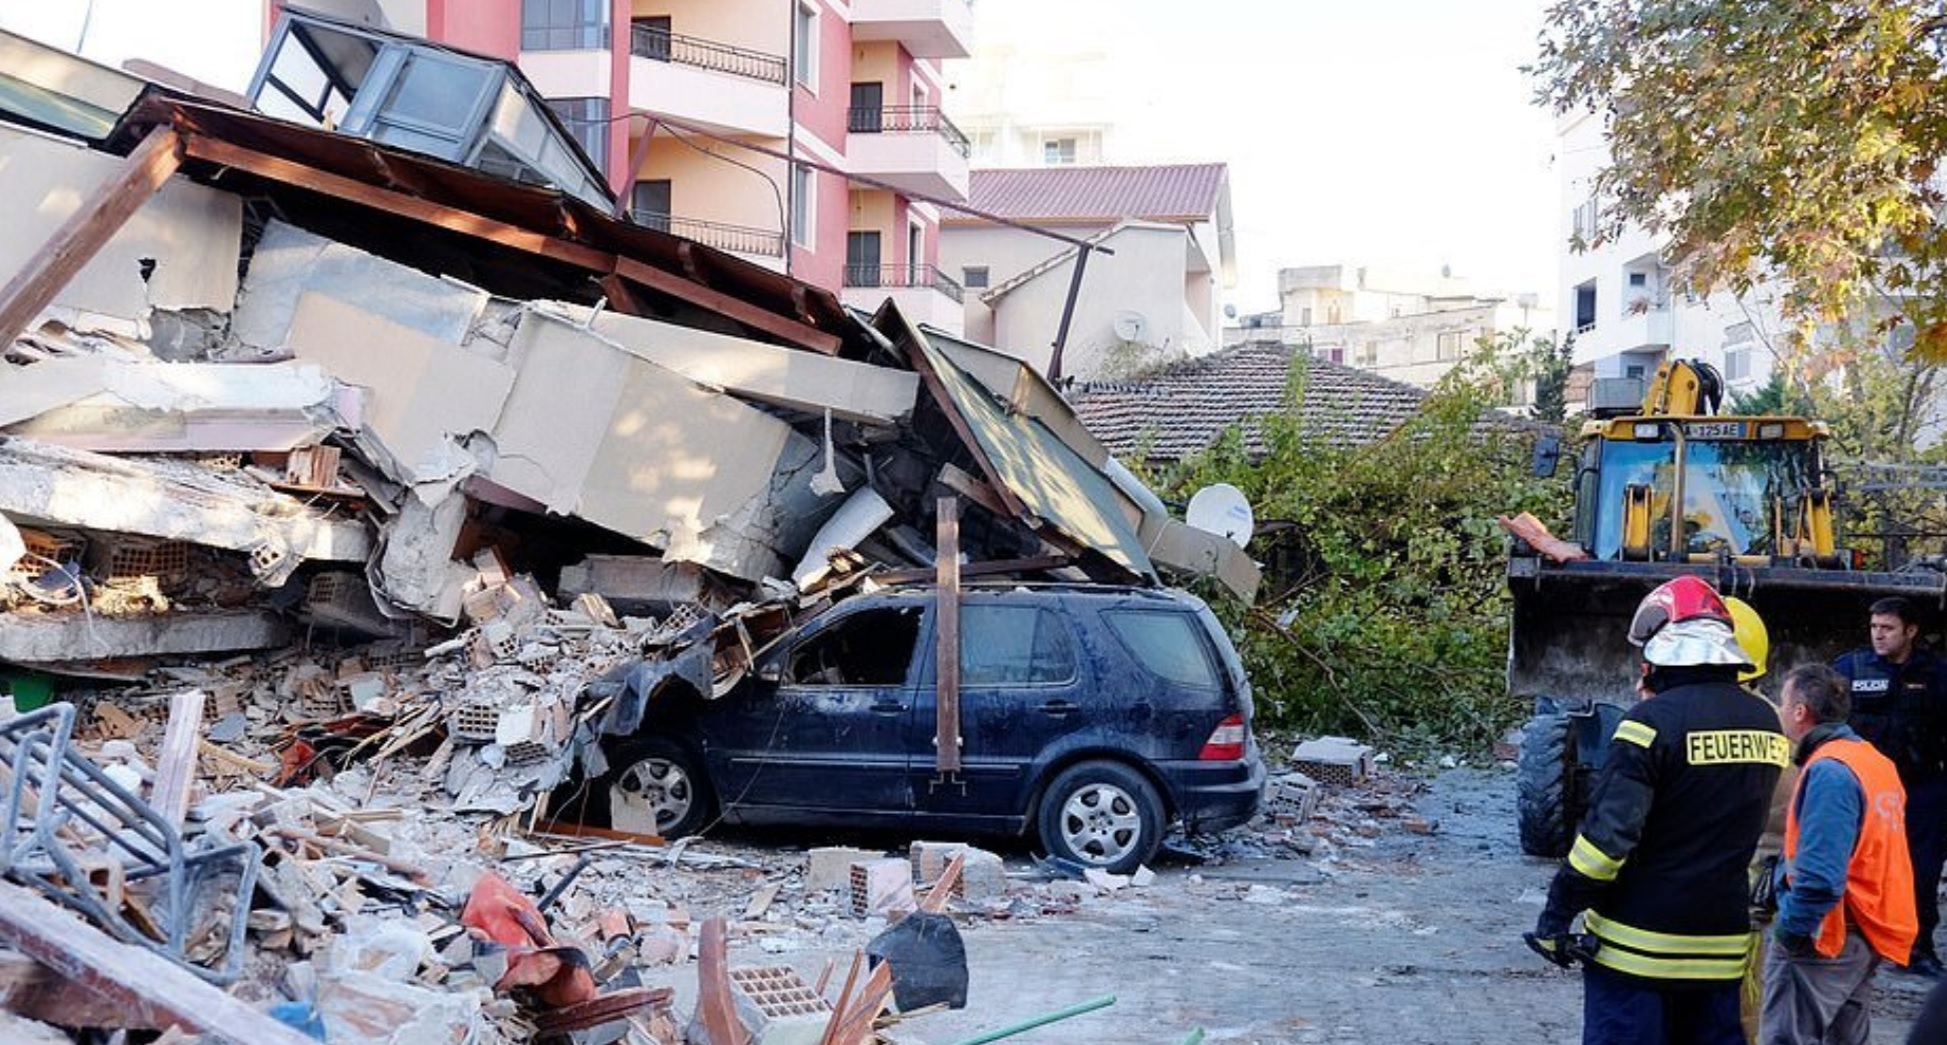 https://www.europafm.ro/wp-content/uploads/2019/11/albania-cutremur-seism.jpg